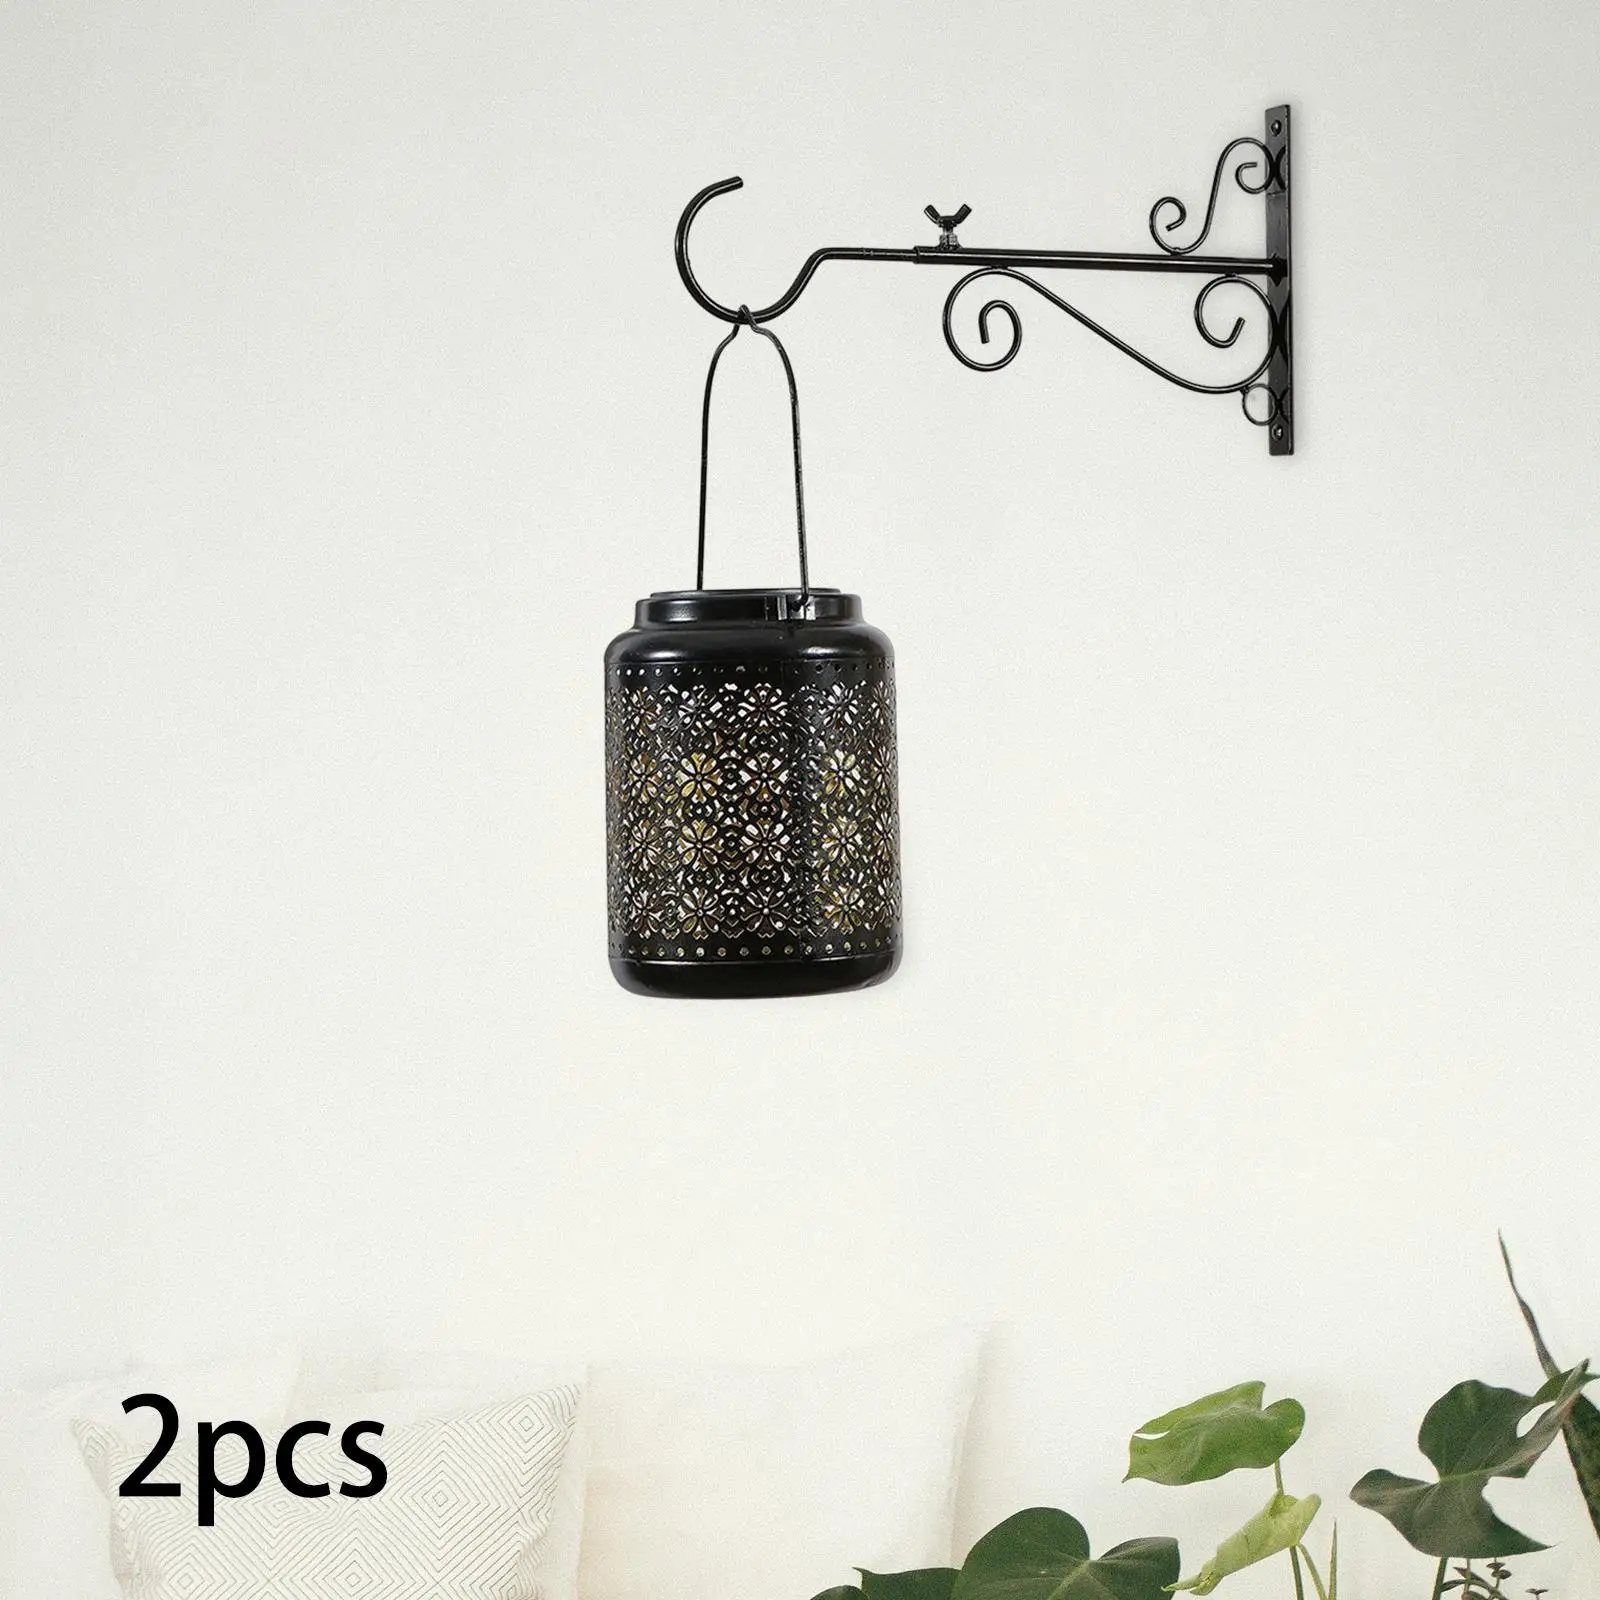 2 Pieces Wall Hanging Basket Bracket for Flower Pot Hanging Bird Feeders